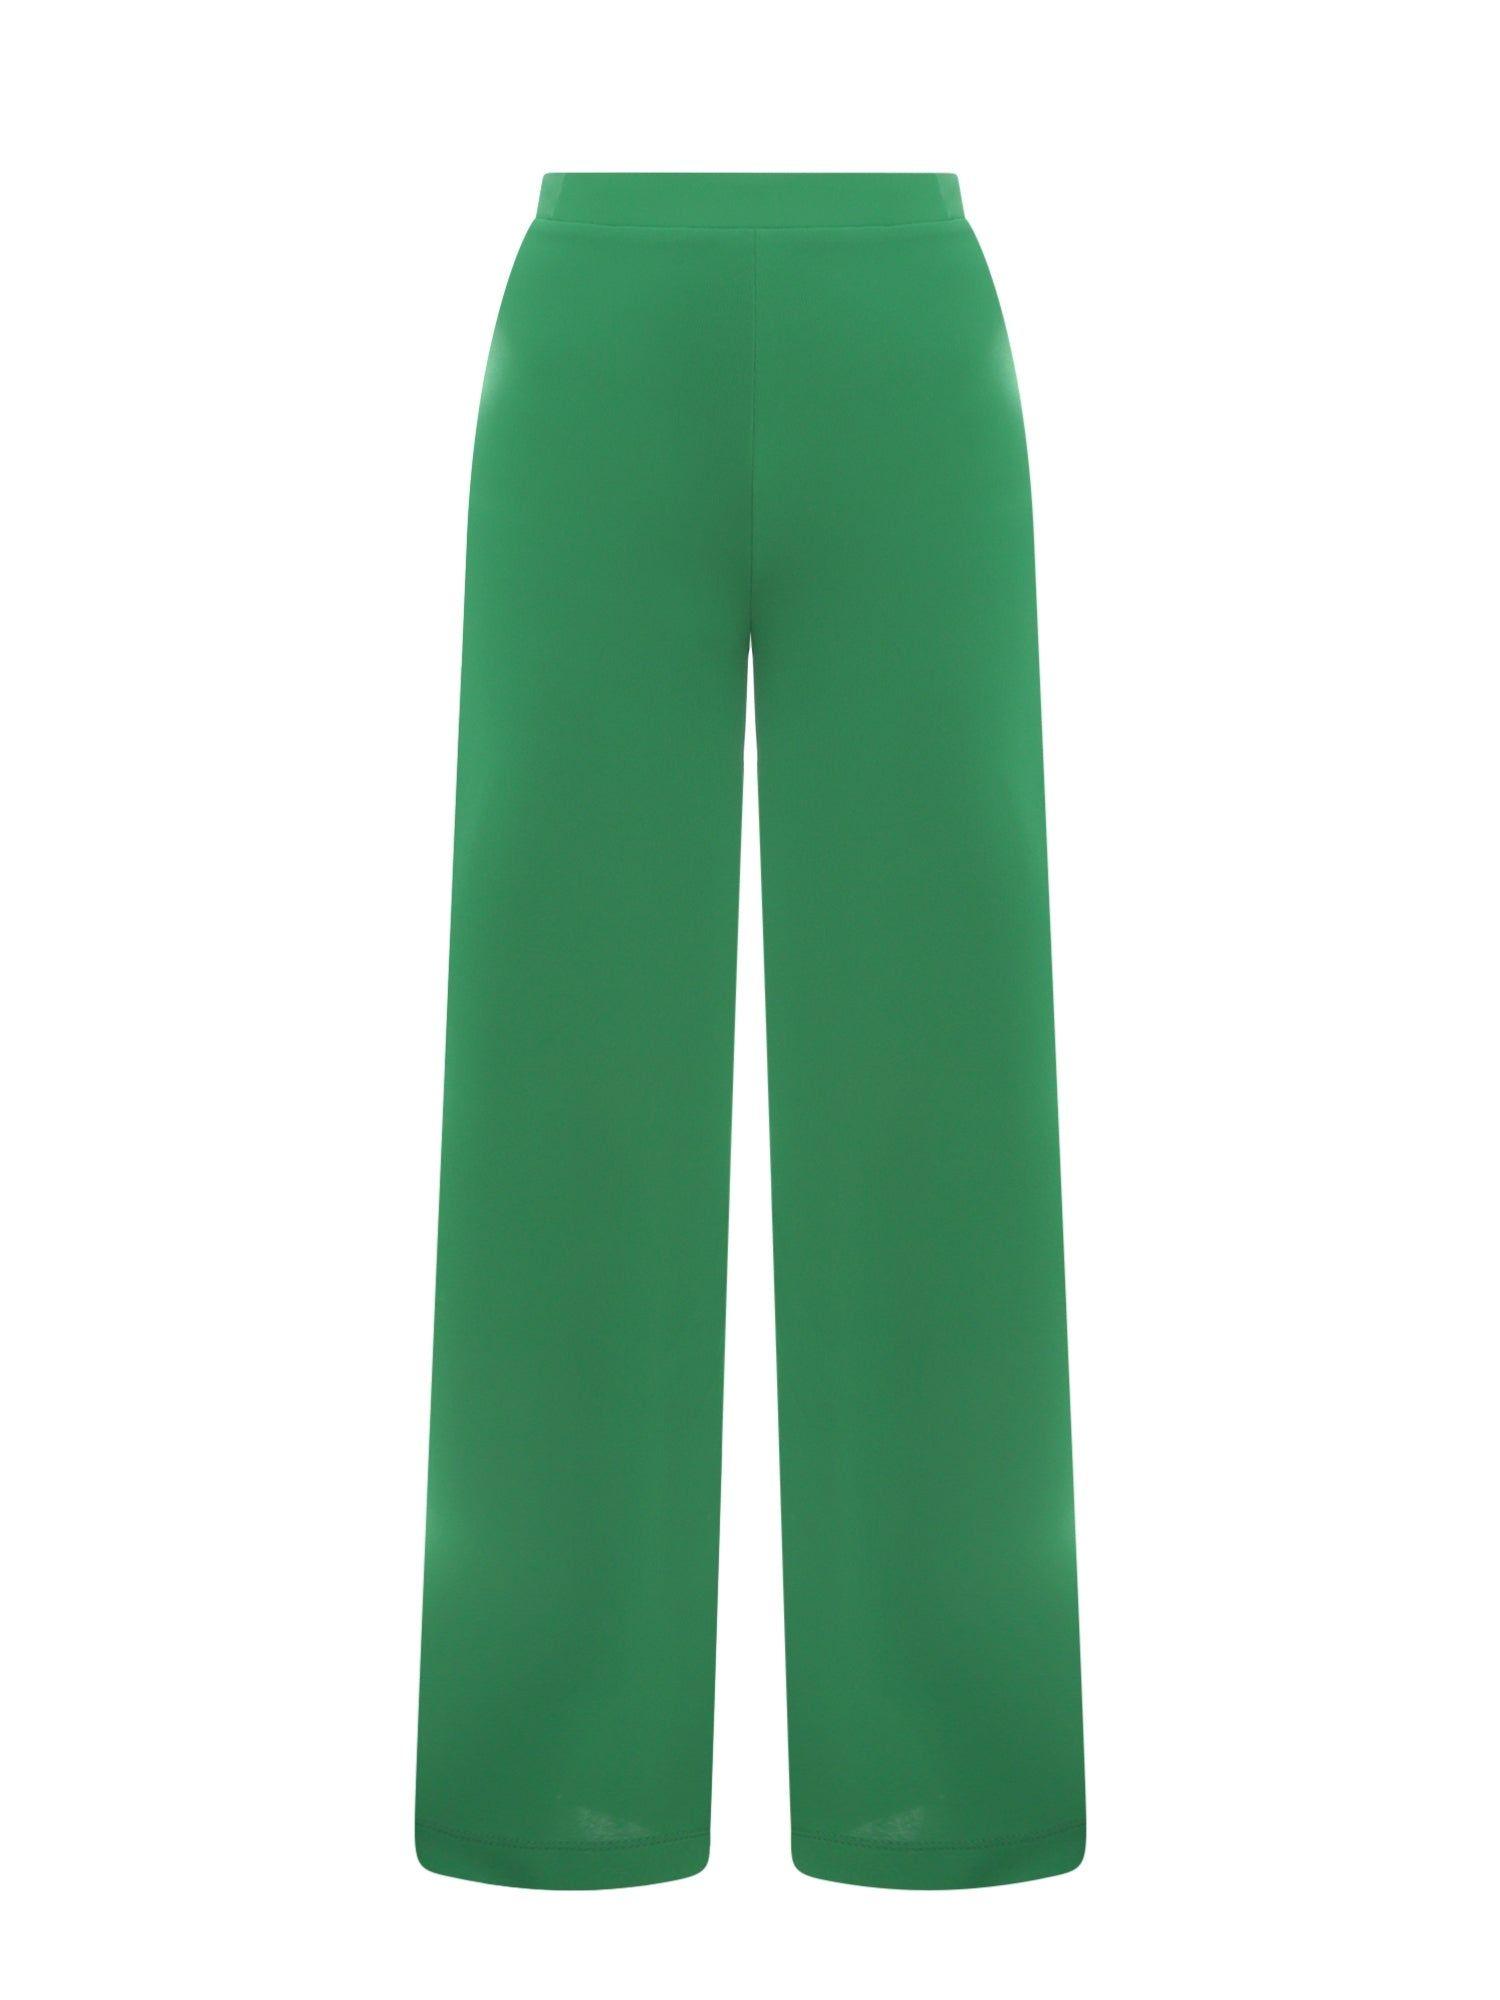 Erika Cavallini Semi Couture Acetate Pants in Green | Lyst